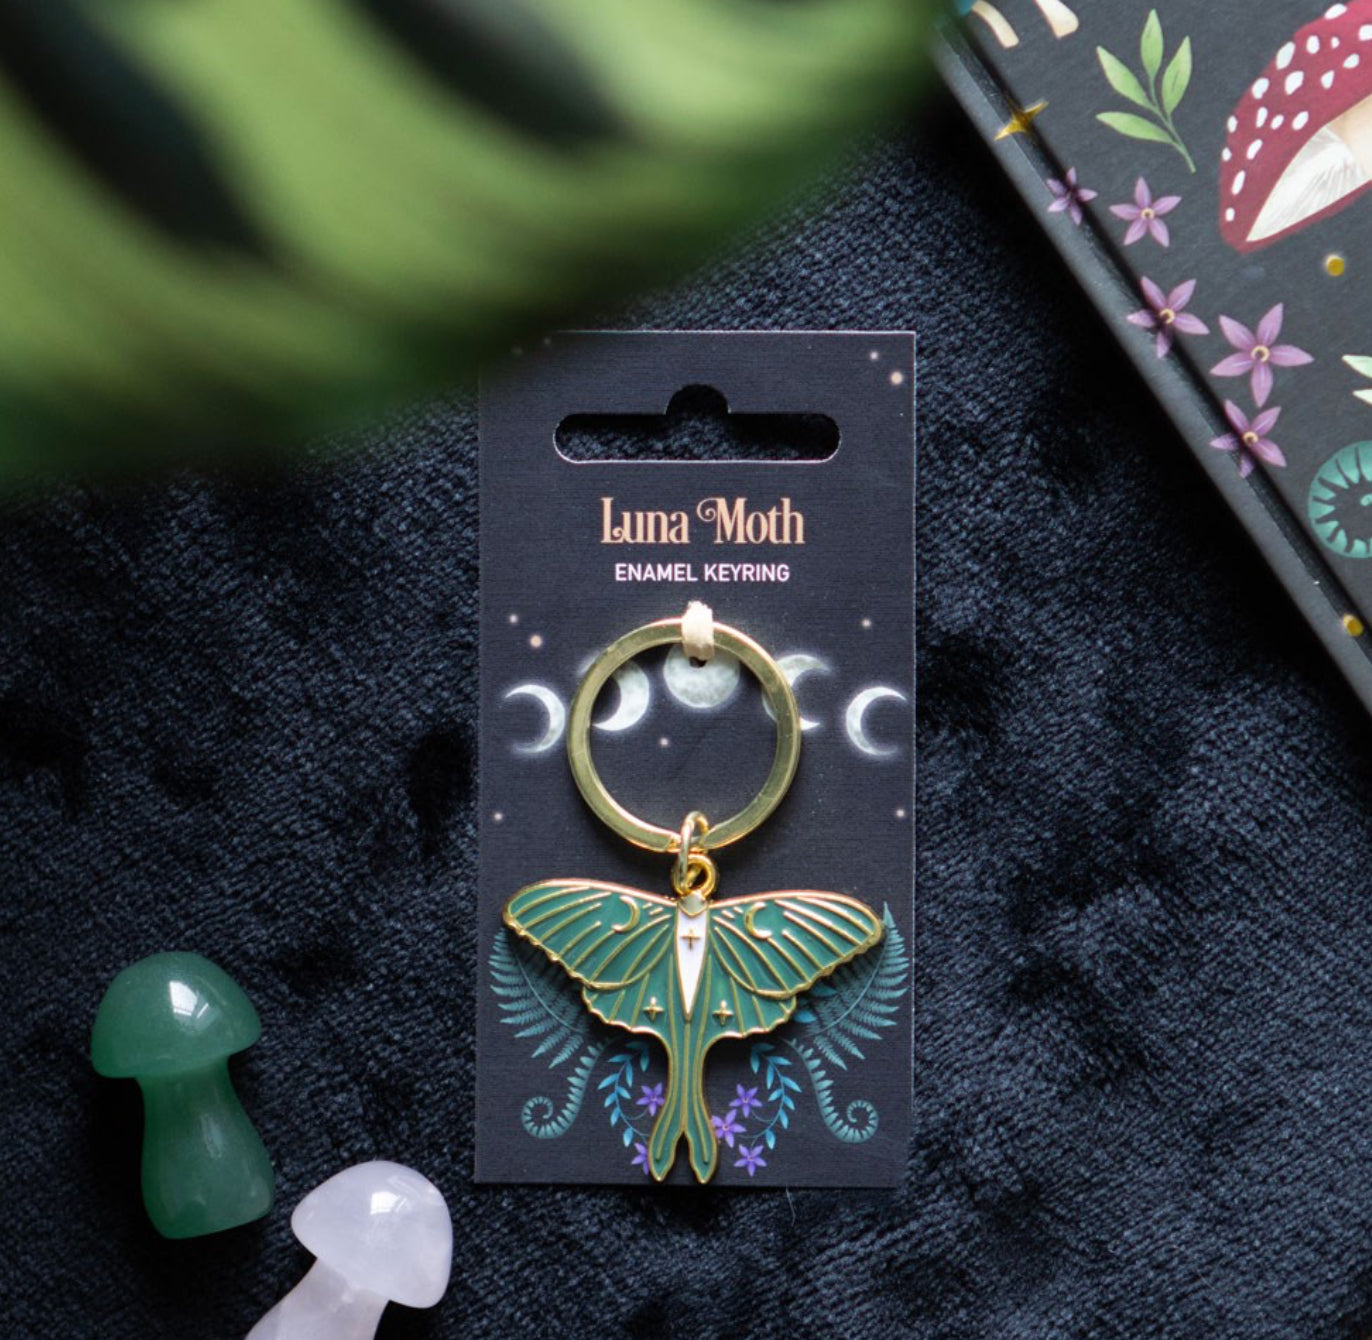 Luna Moth Enamel Keyring